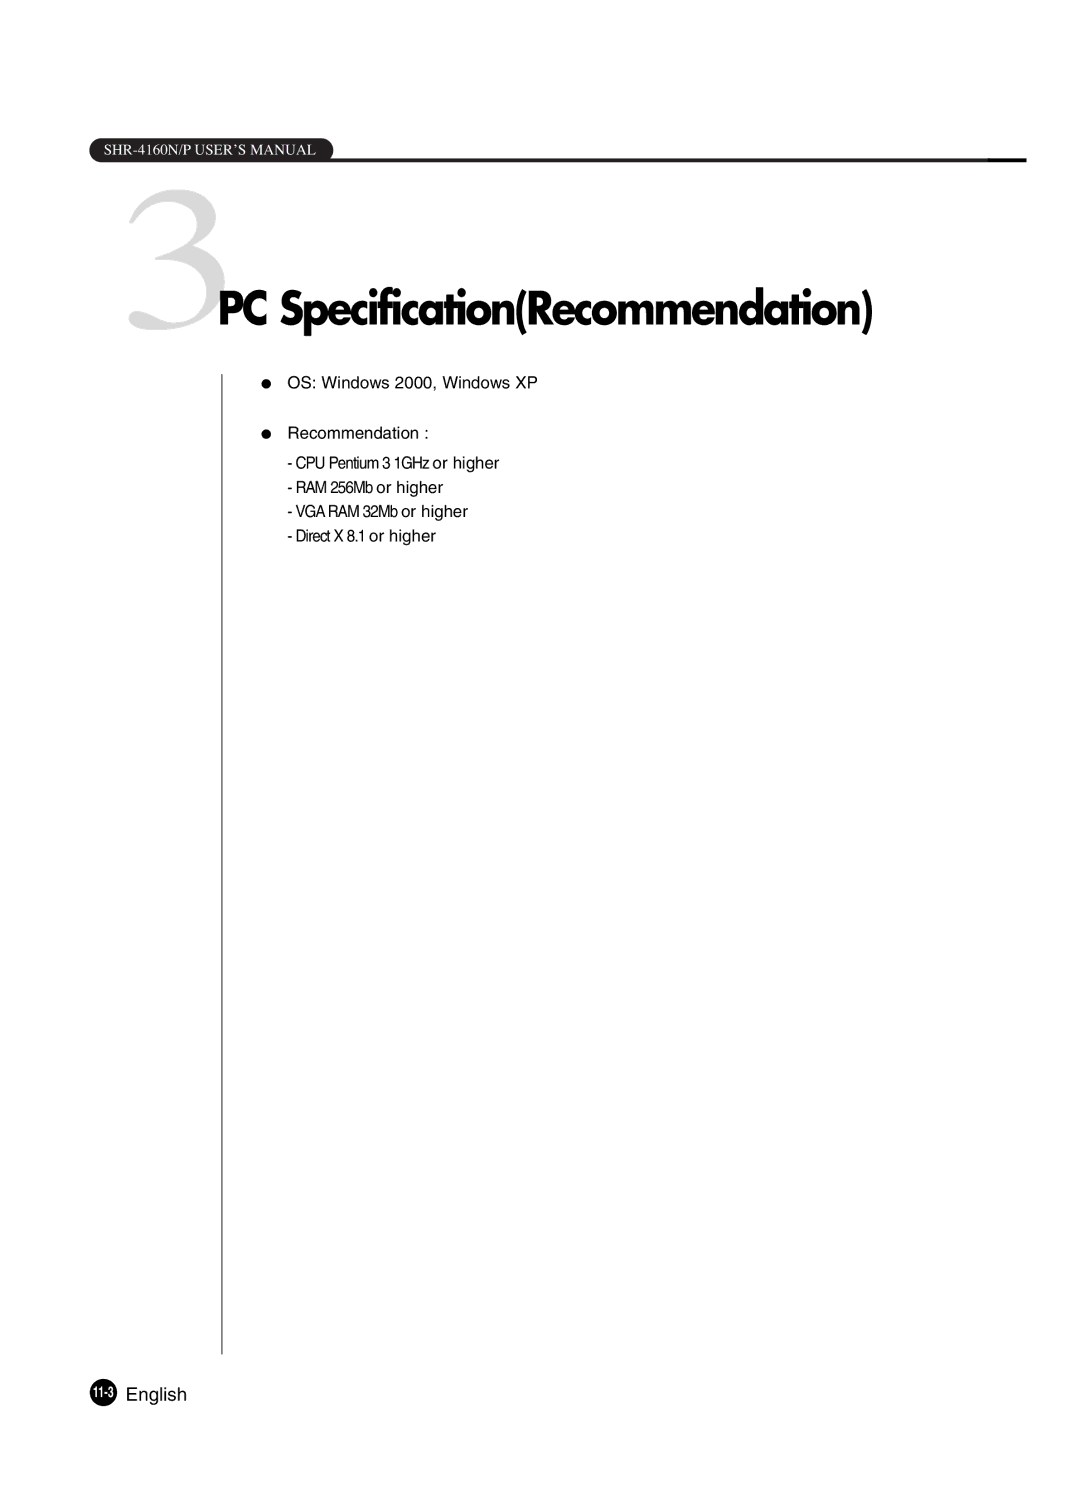 Samsung SHR-4160P manual 3PC SpecificationRecommendation, 11-3English 